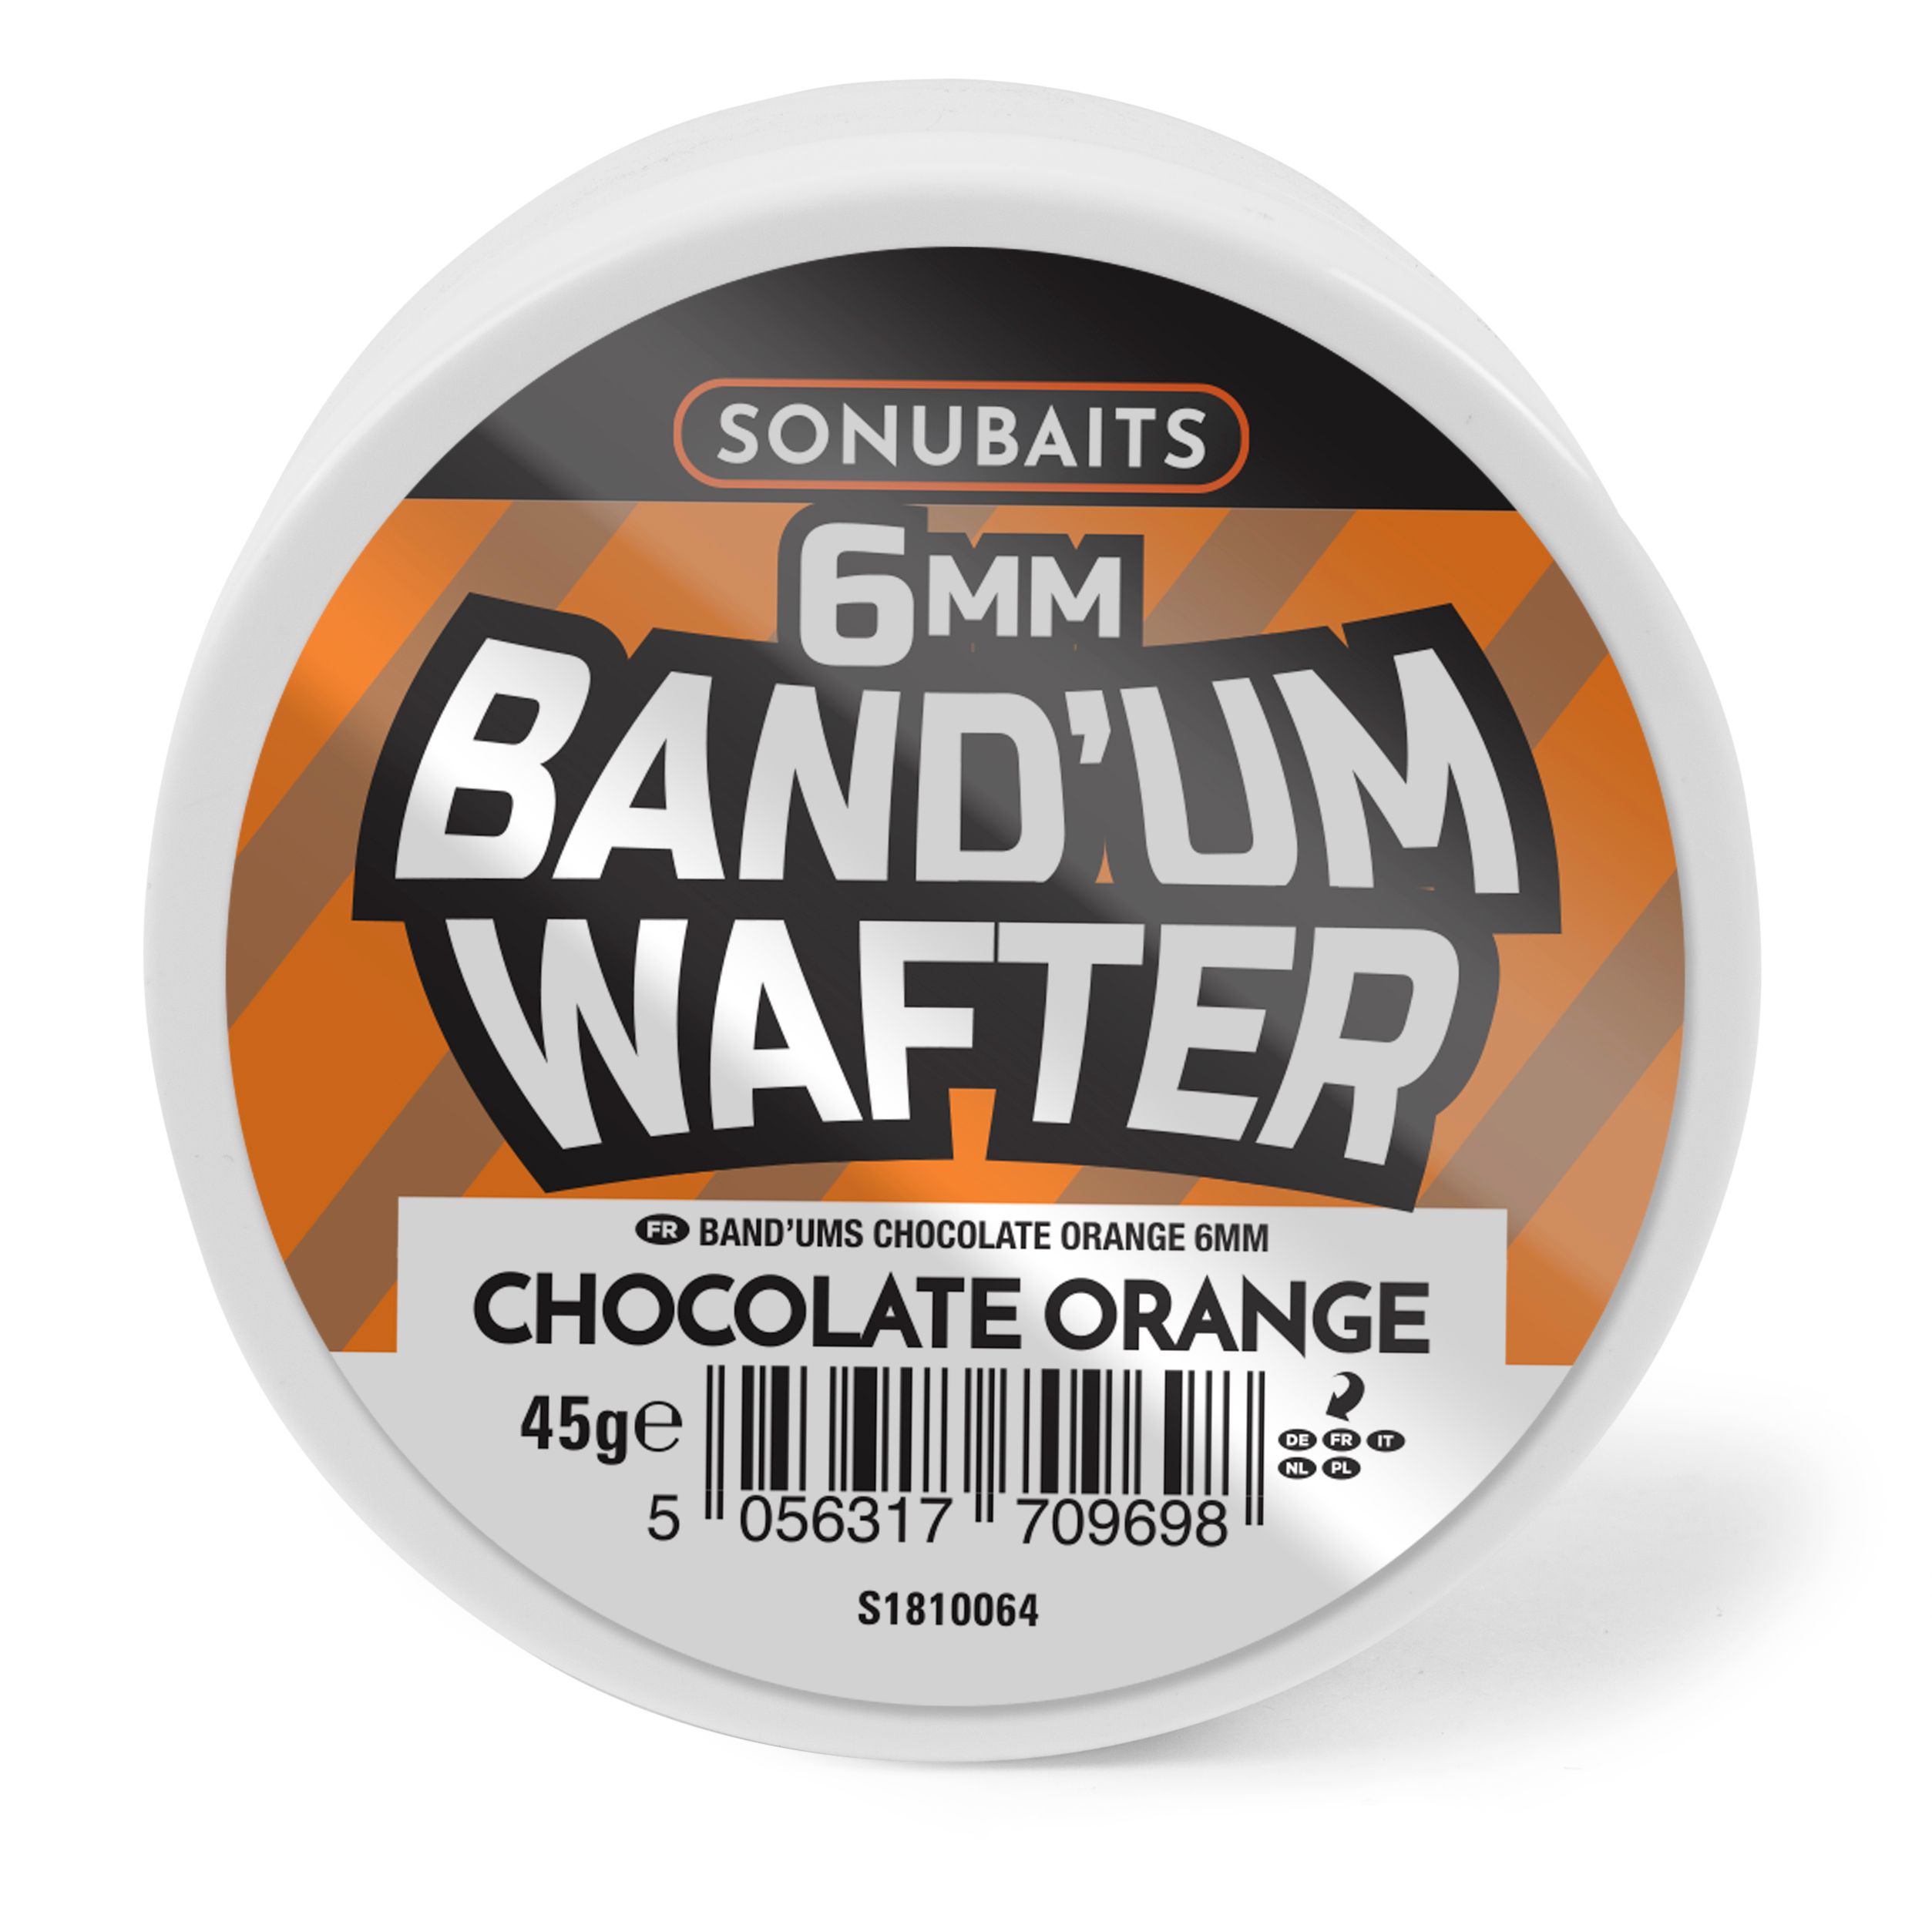 Sonubaits Band'um Wafters 6mm - Chocolate Orange